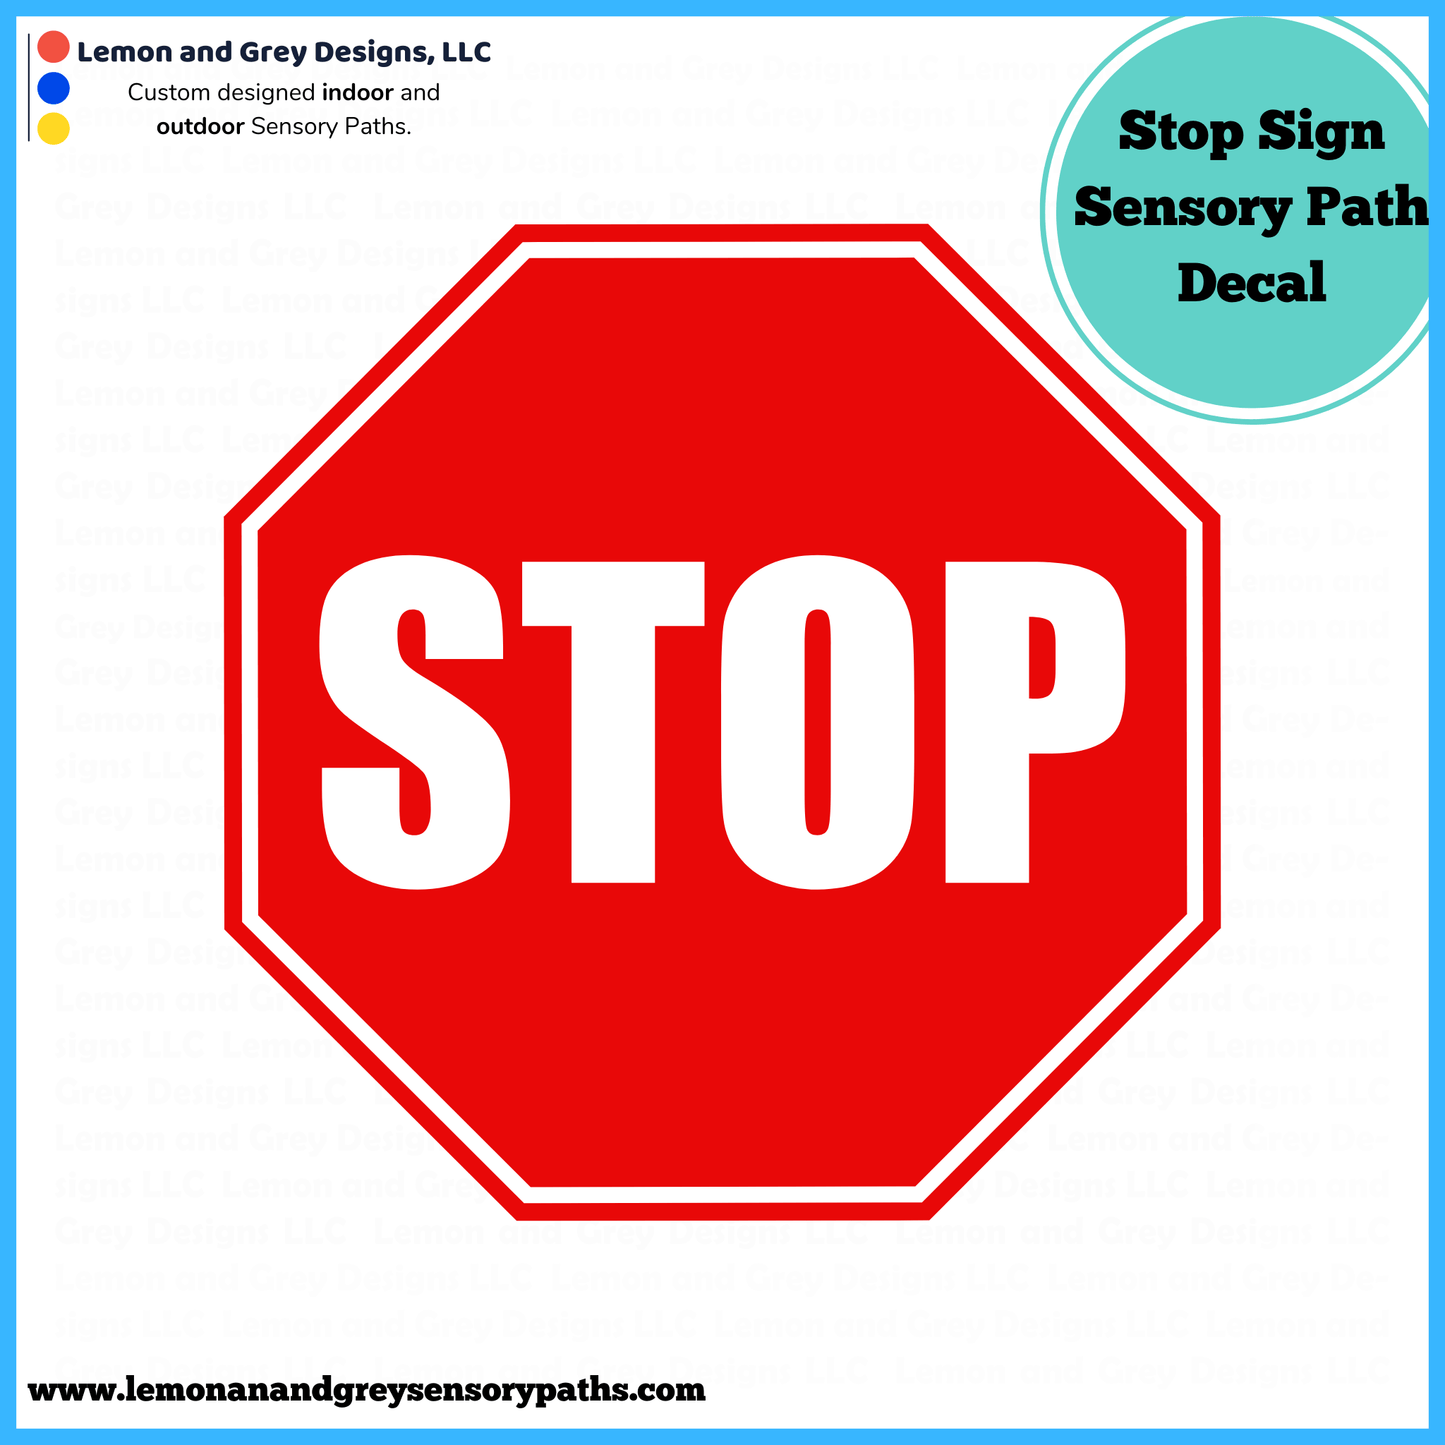 Stop Sign Sensory Path Decal